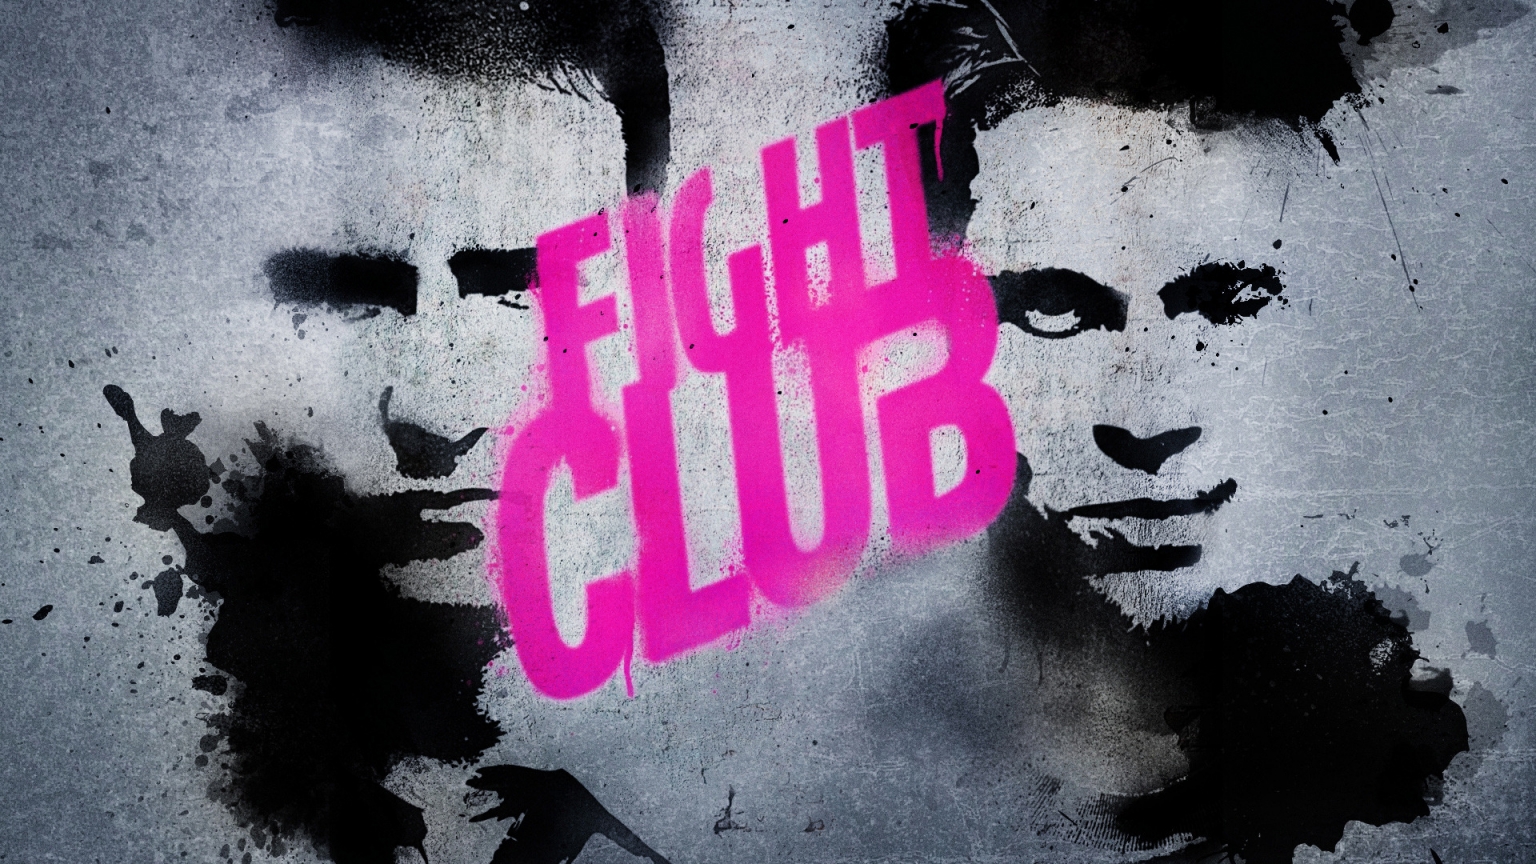 Fight Club Artwork for 1536 x 864 HDTV resolution